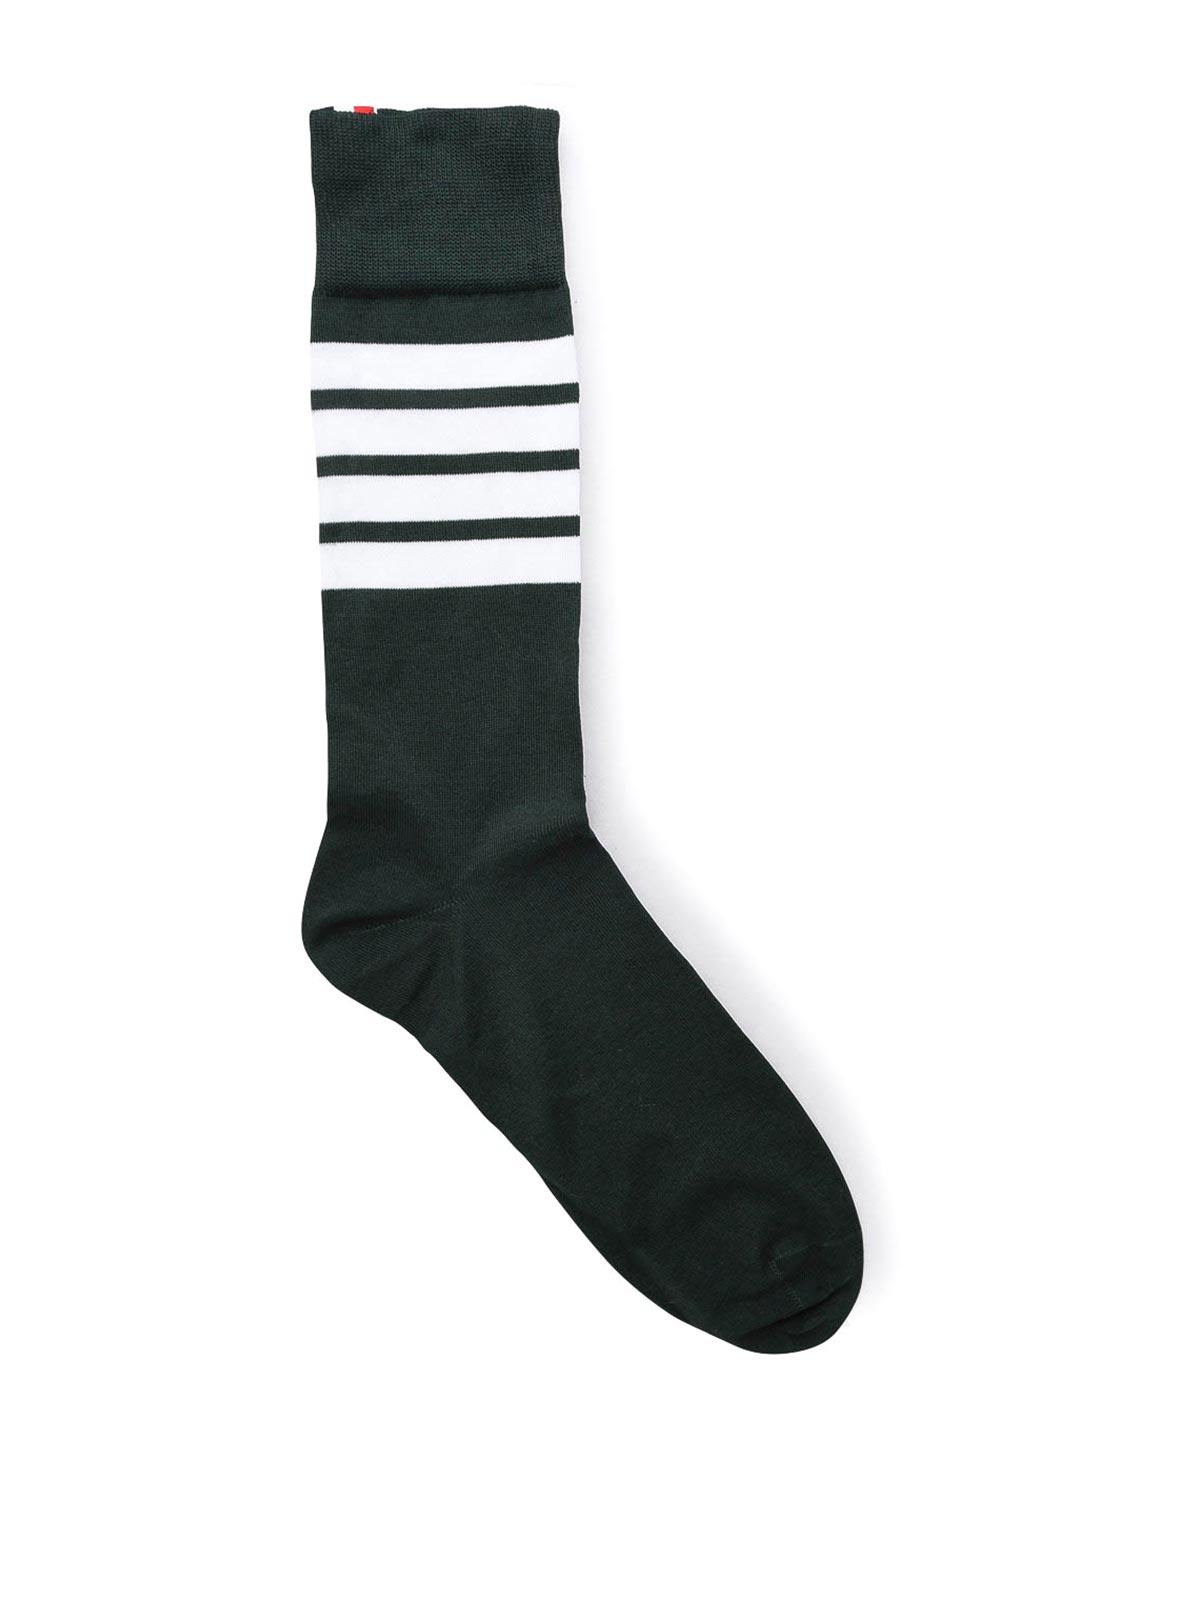 Thom Browne Green Cotton Blend Sock